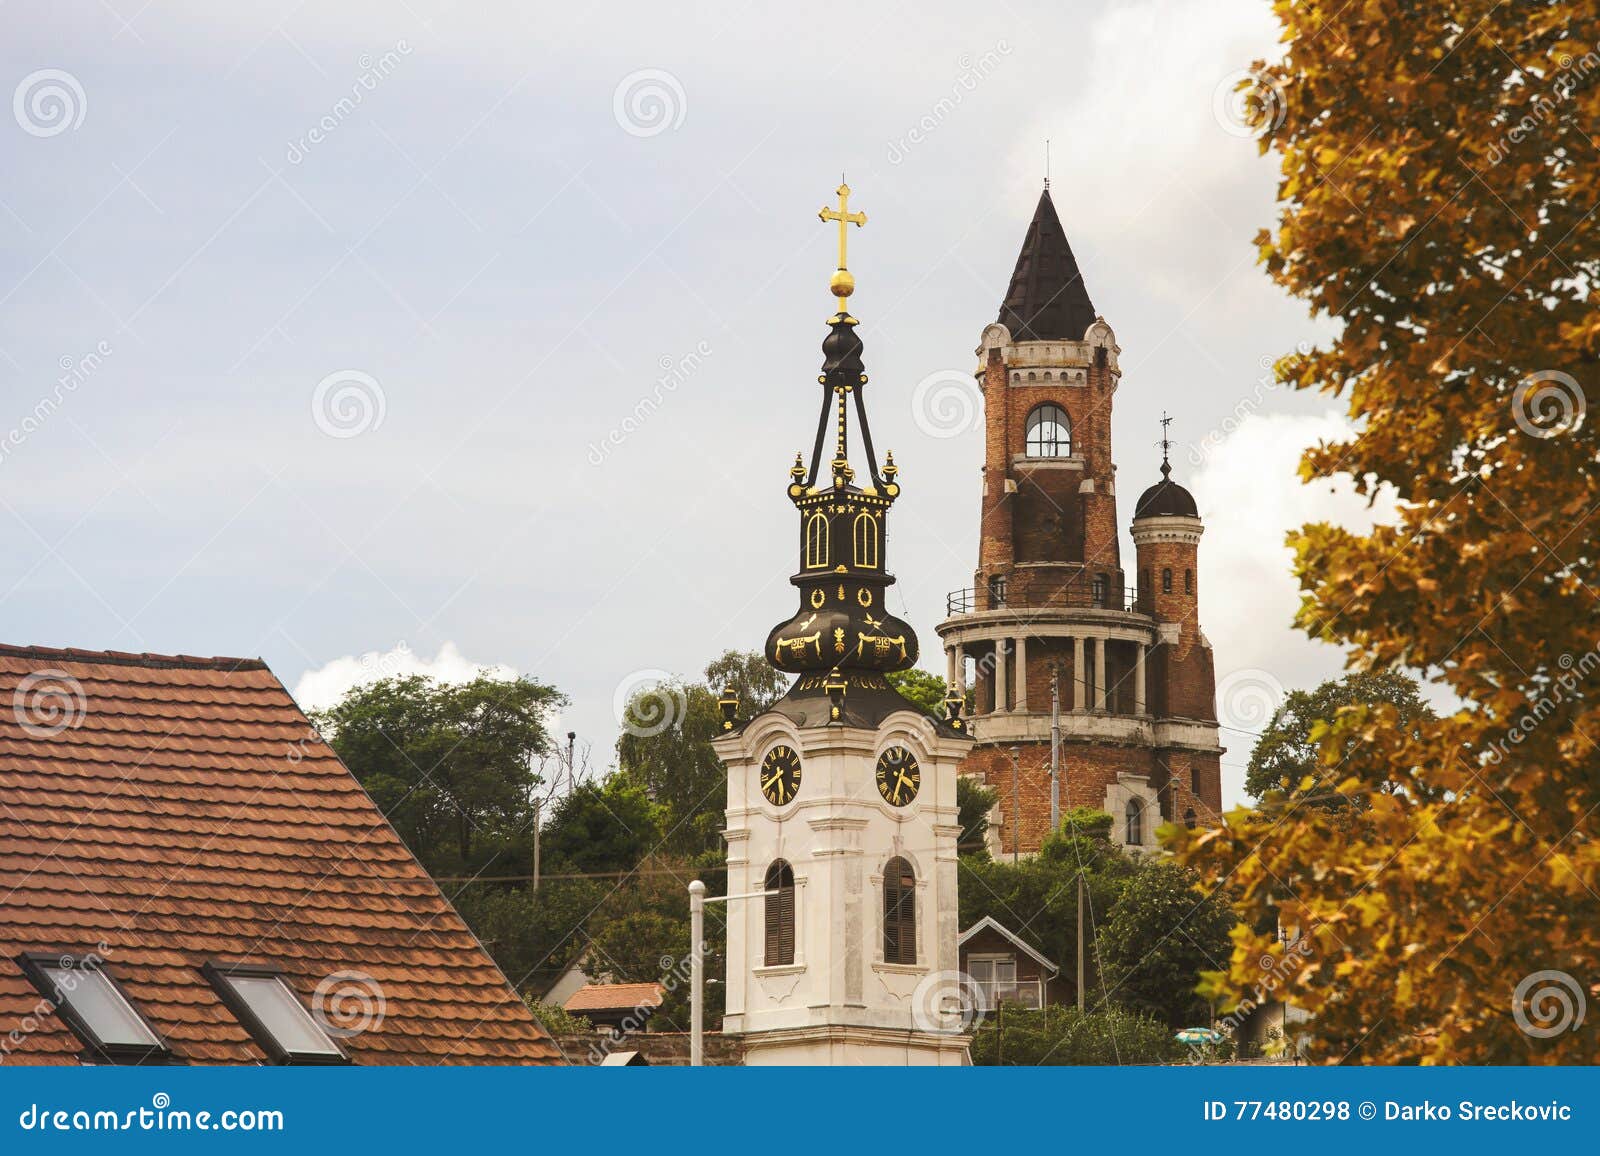 gardos tower and orthodox church in zemun,serbia